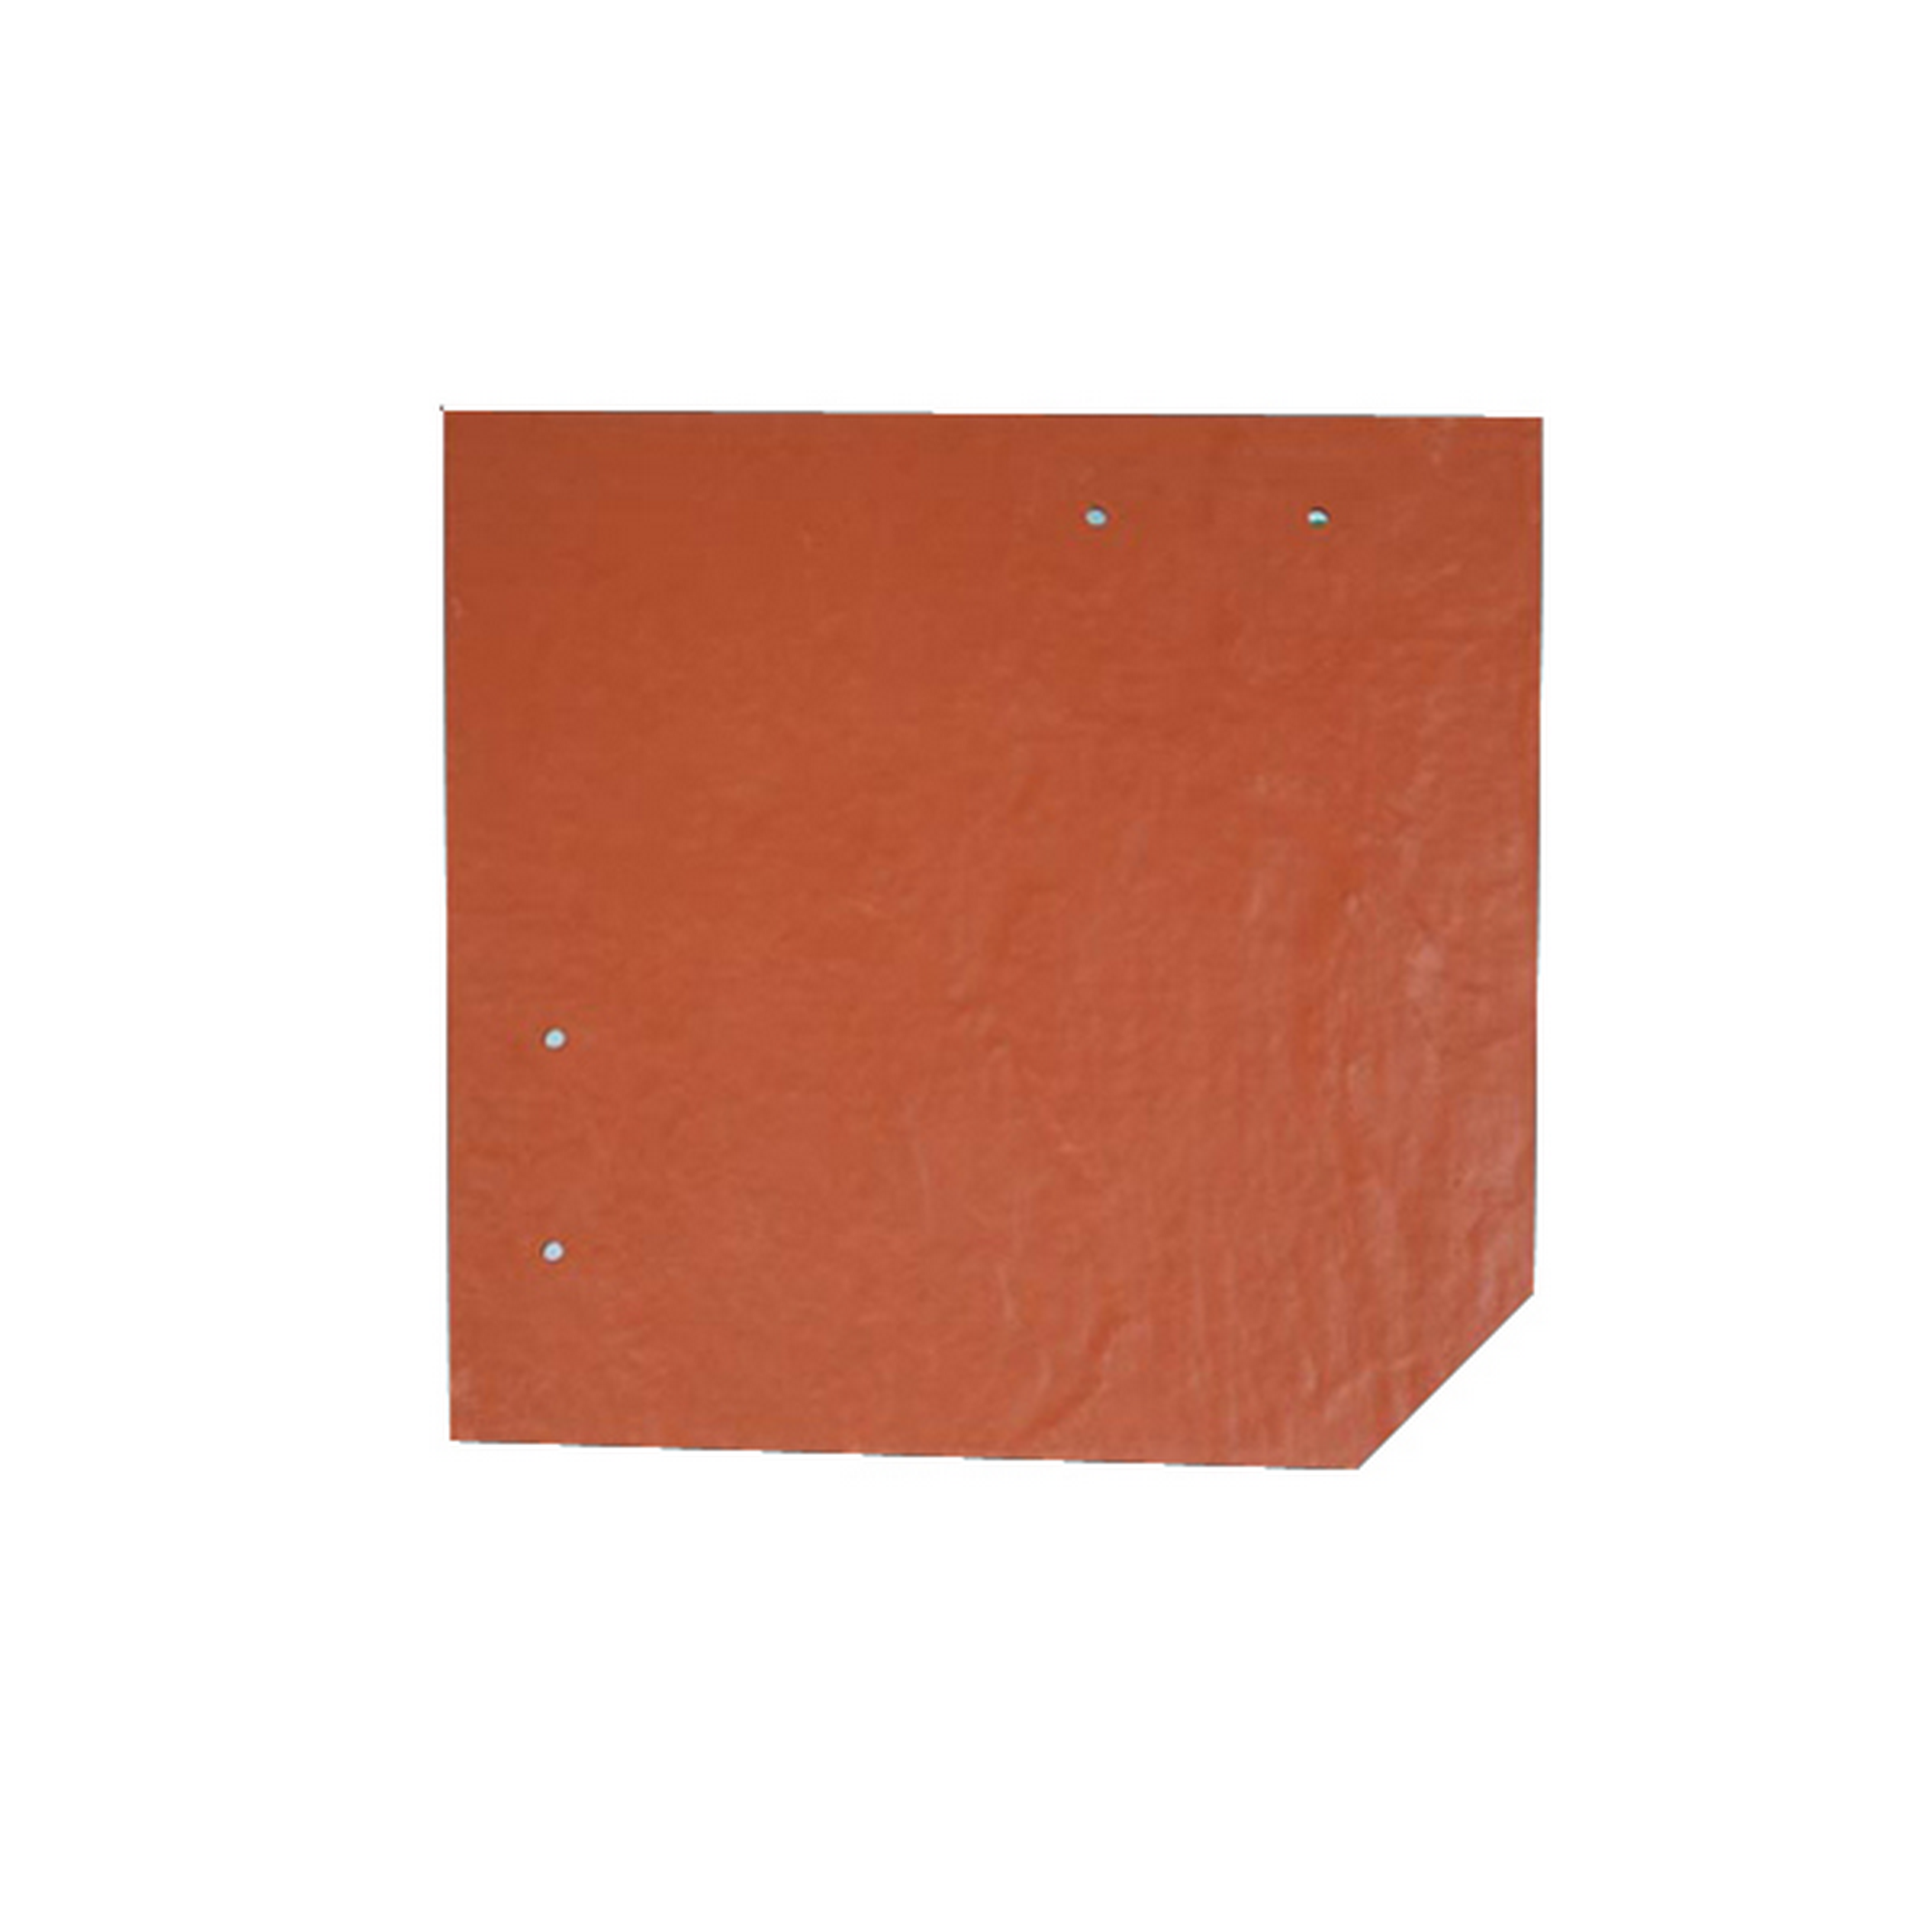 Carport 'Spreewald' rote Blende  396 x 589 cm imprägniert + product picture